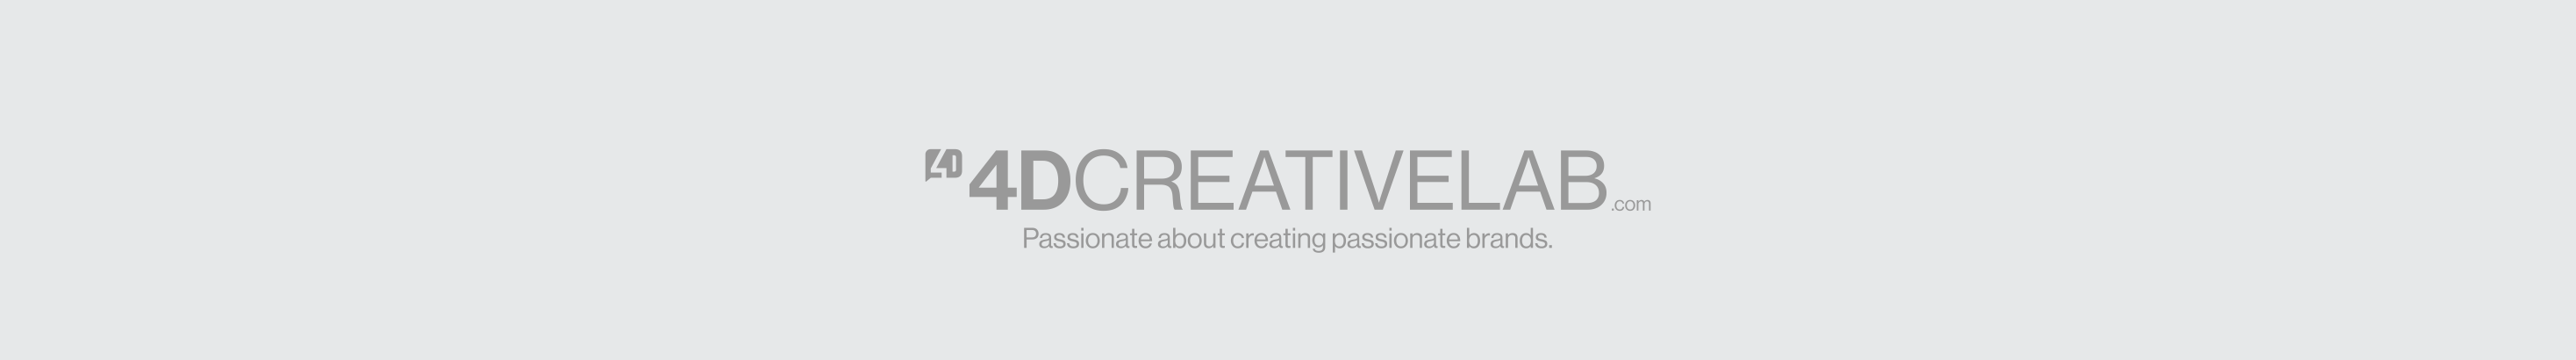 4D Creative Lab's profile banner